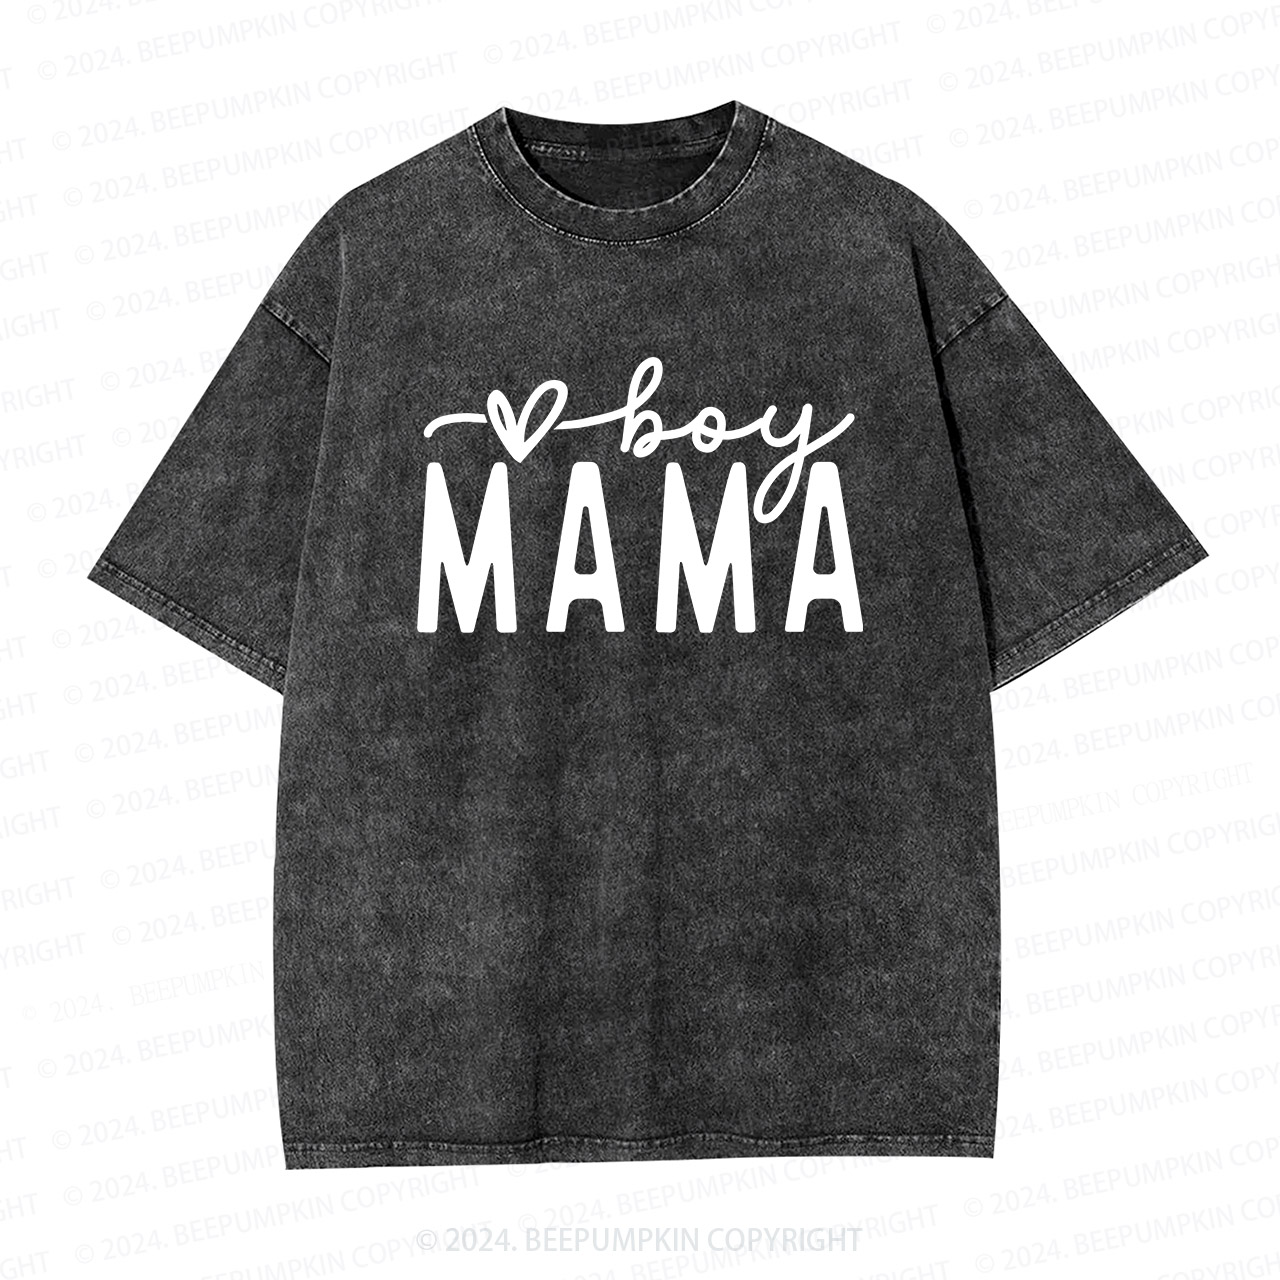 Mom Of Boys & Girls Mama Washed T-Shirts 